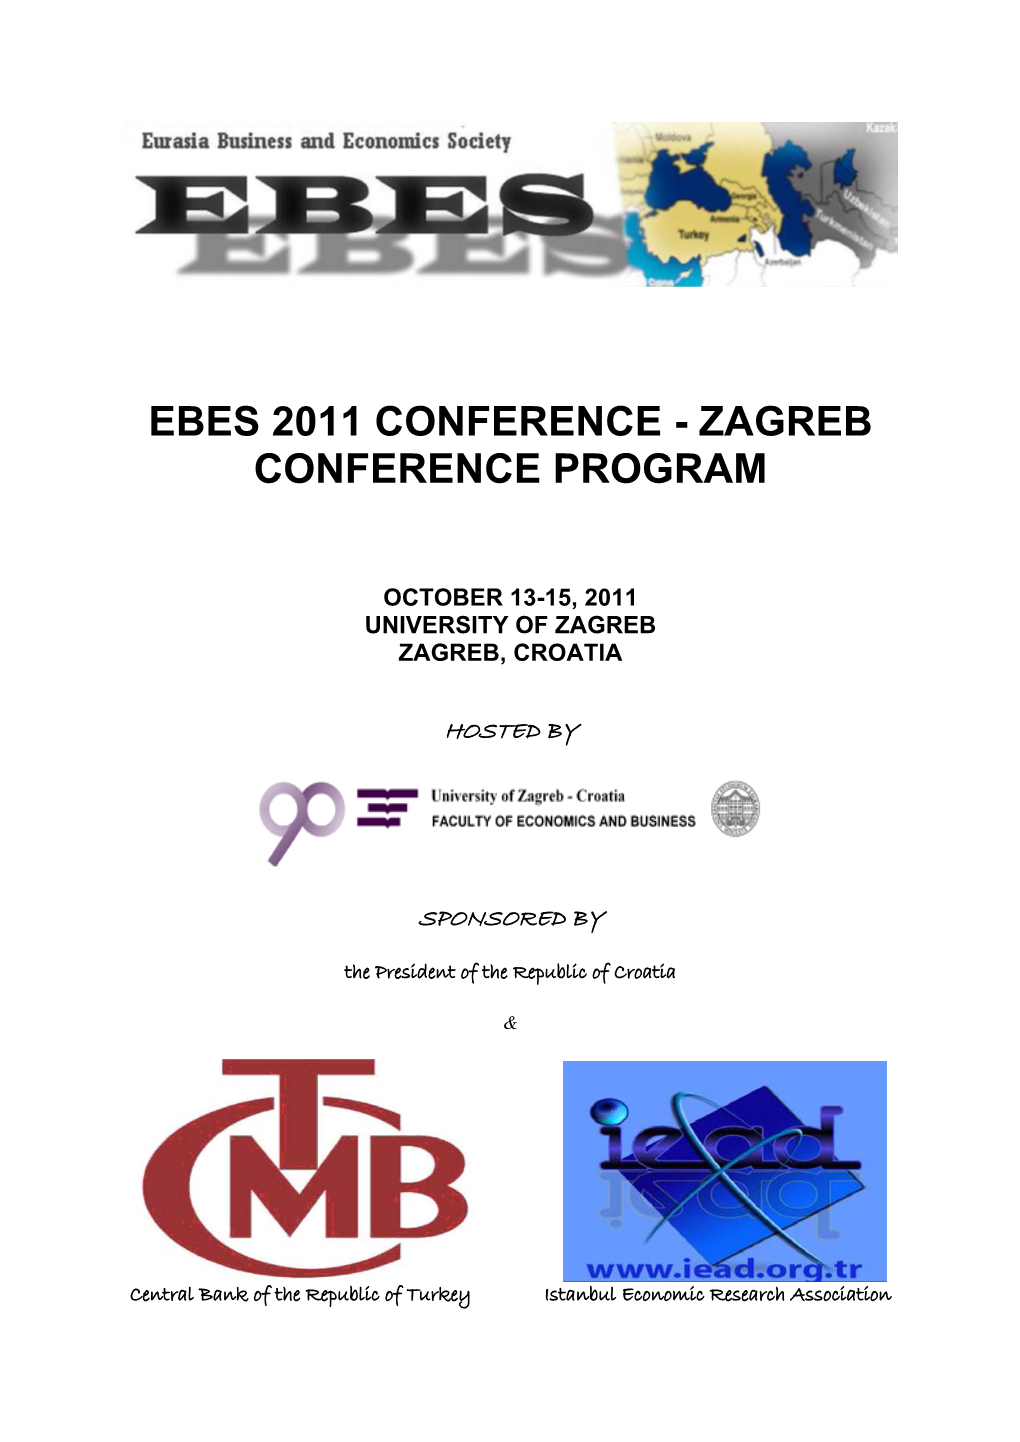 Ebes 2011 Conference - Zagreb Conference Program